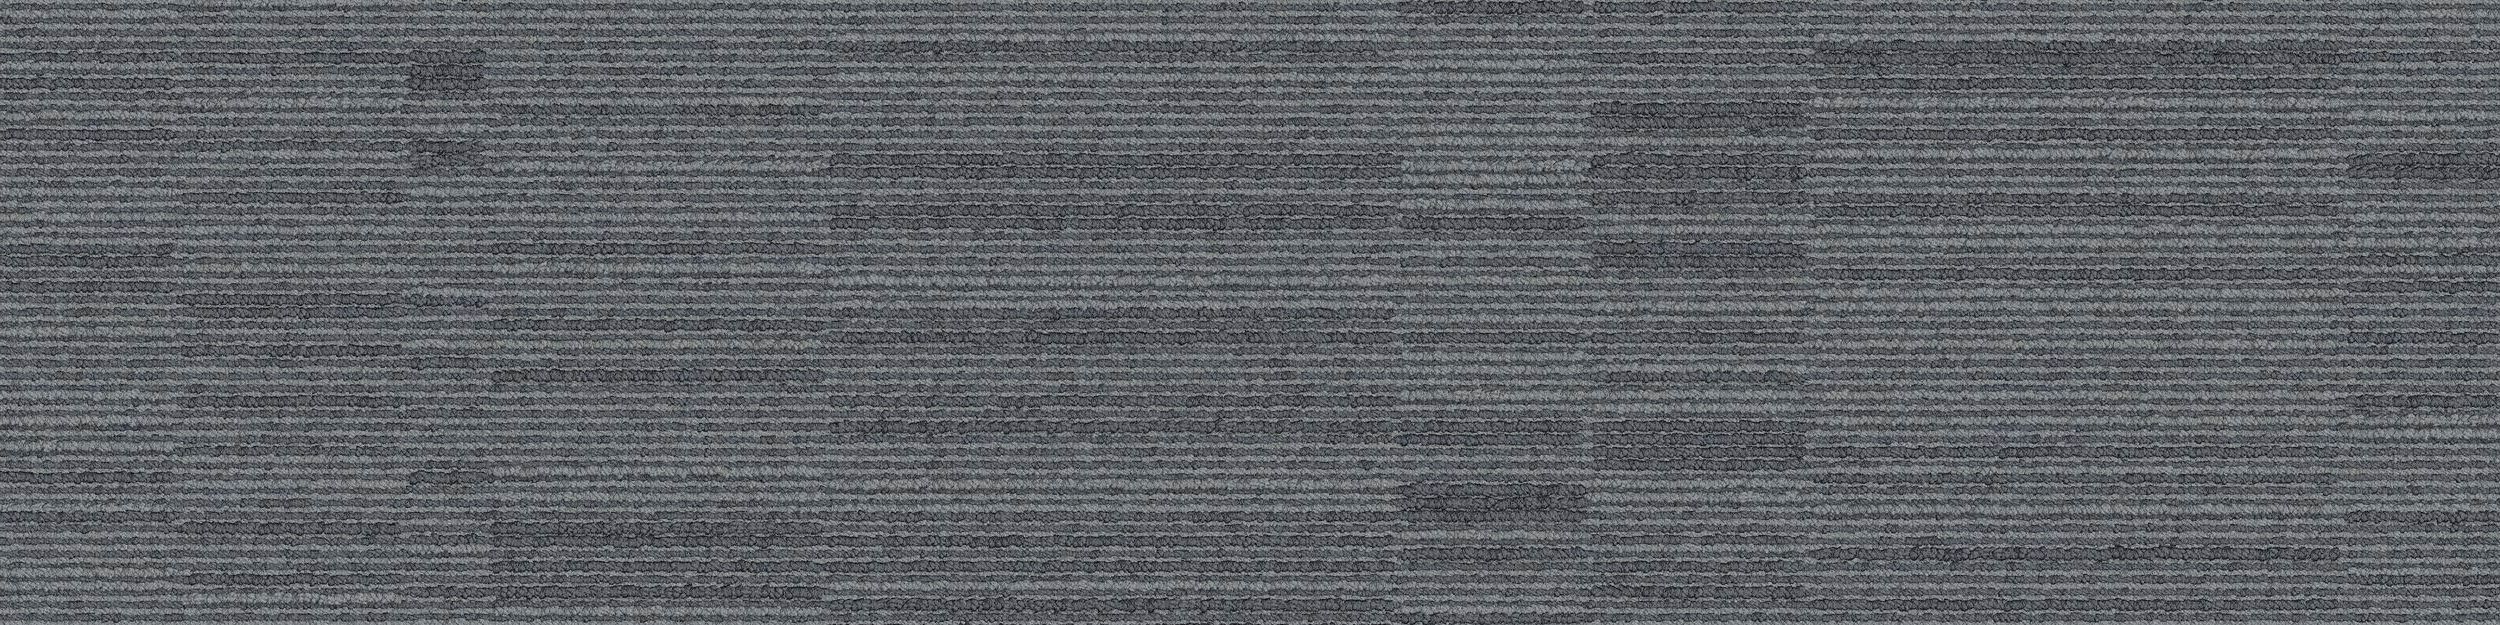 B702 Carpet Tile In North Sea imagen número 2